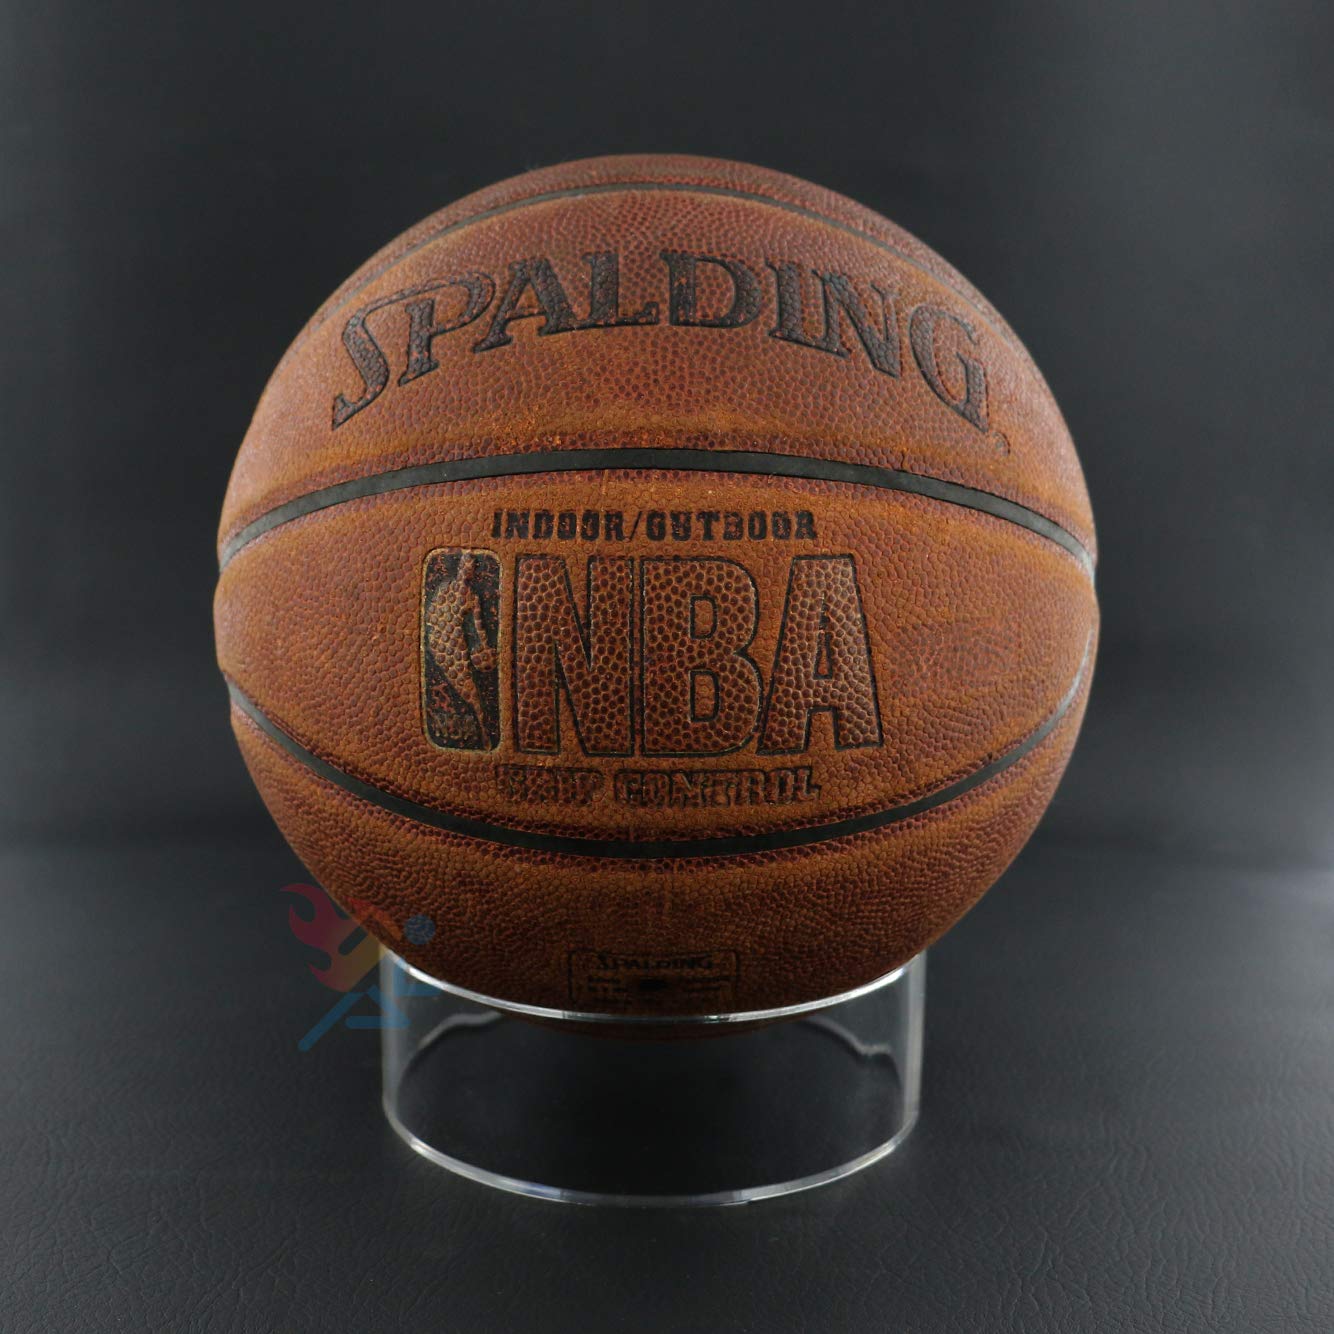 6 x 2 inch Acrylic Sports Ball Display Ring Pedestal Basketball Volleyball Bowling Ball